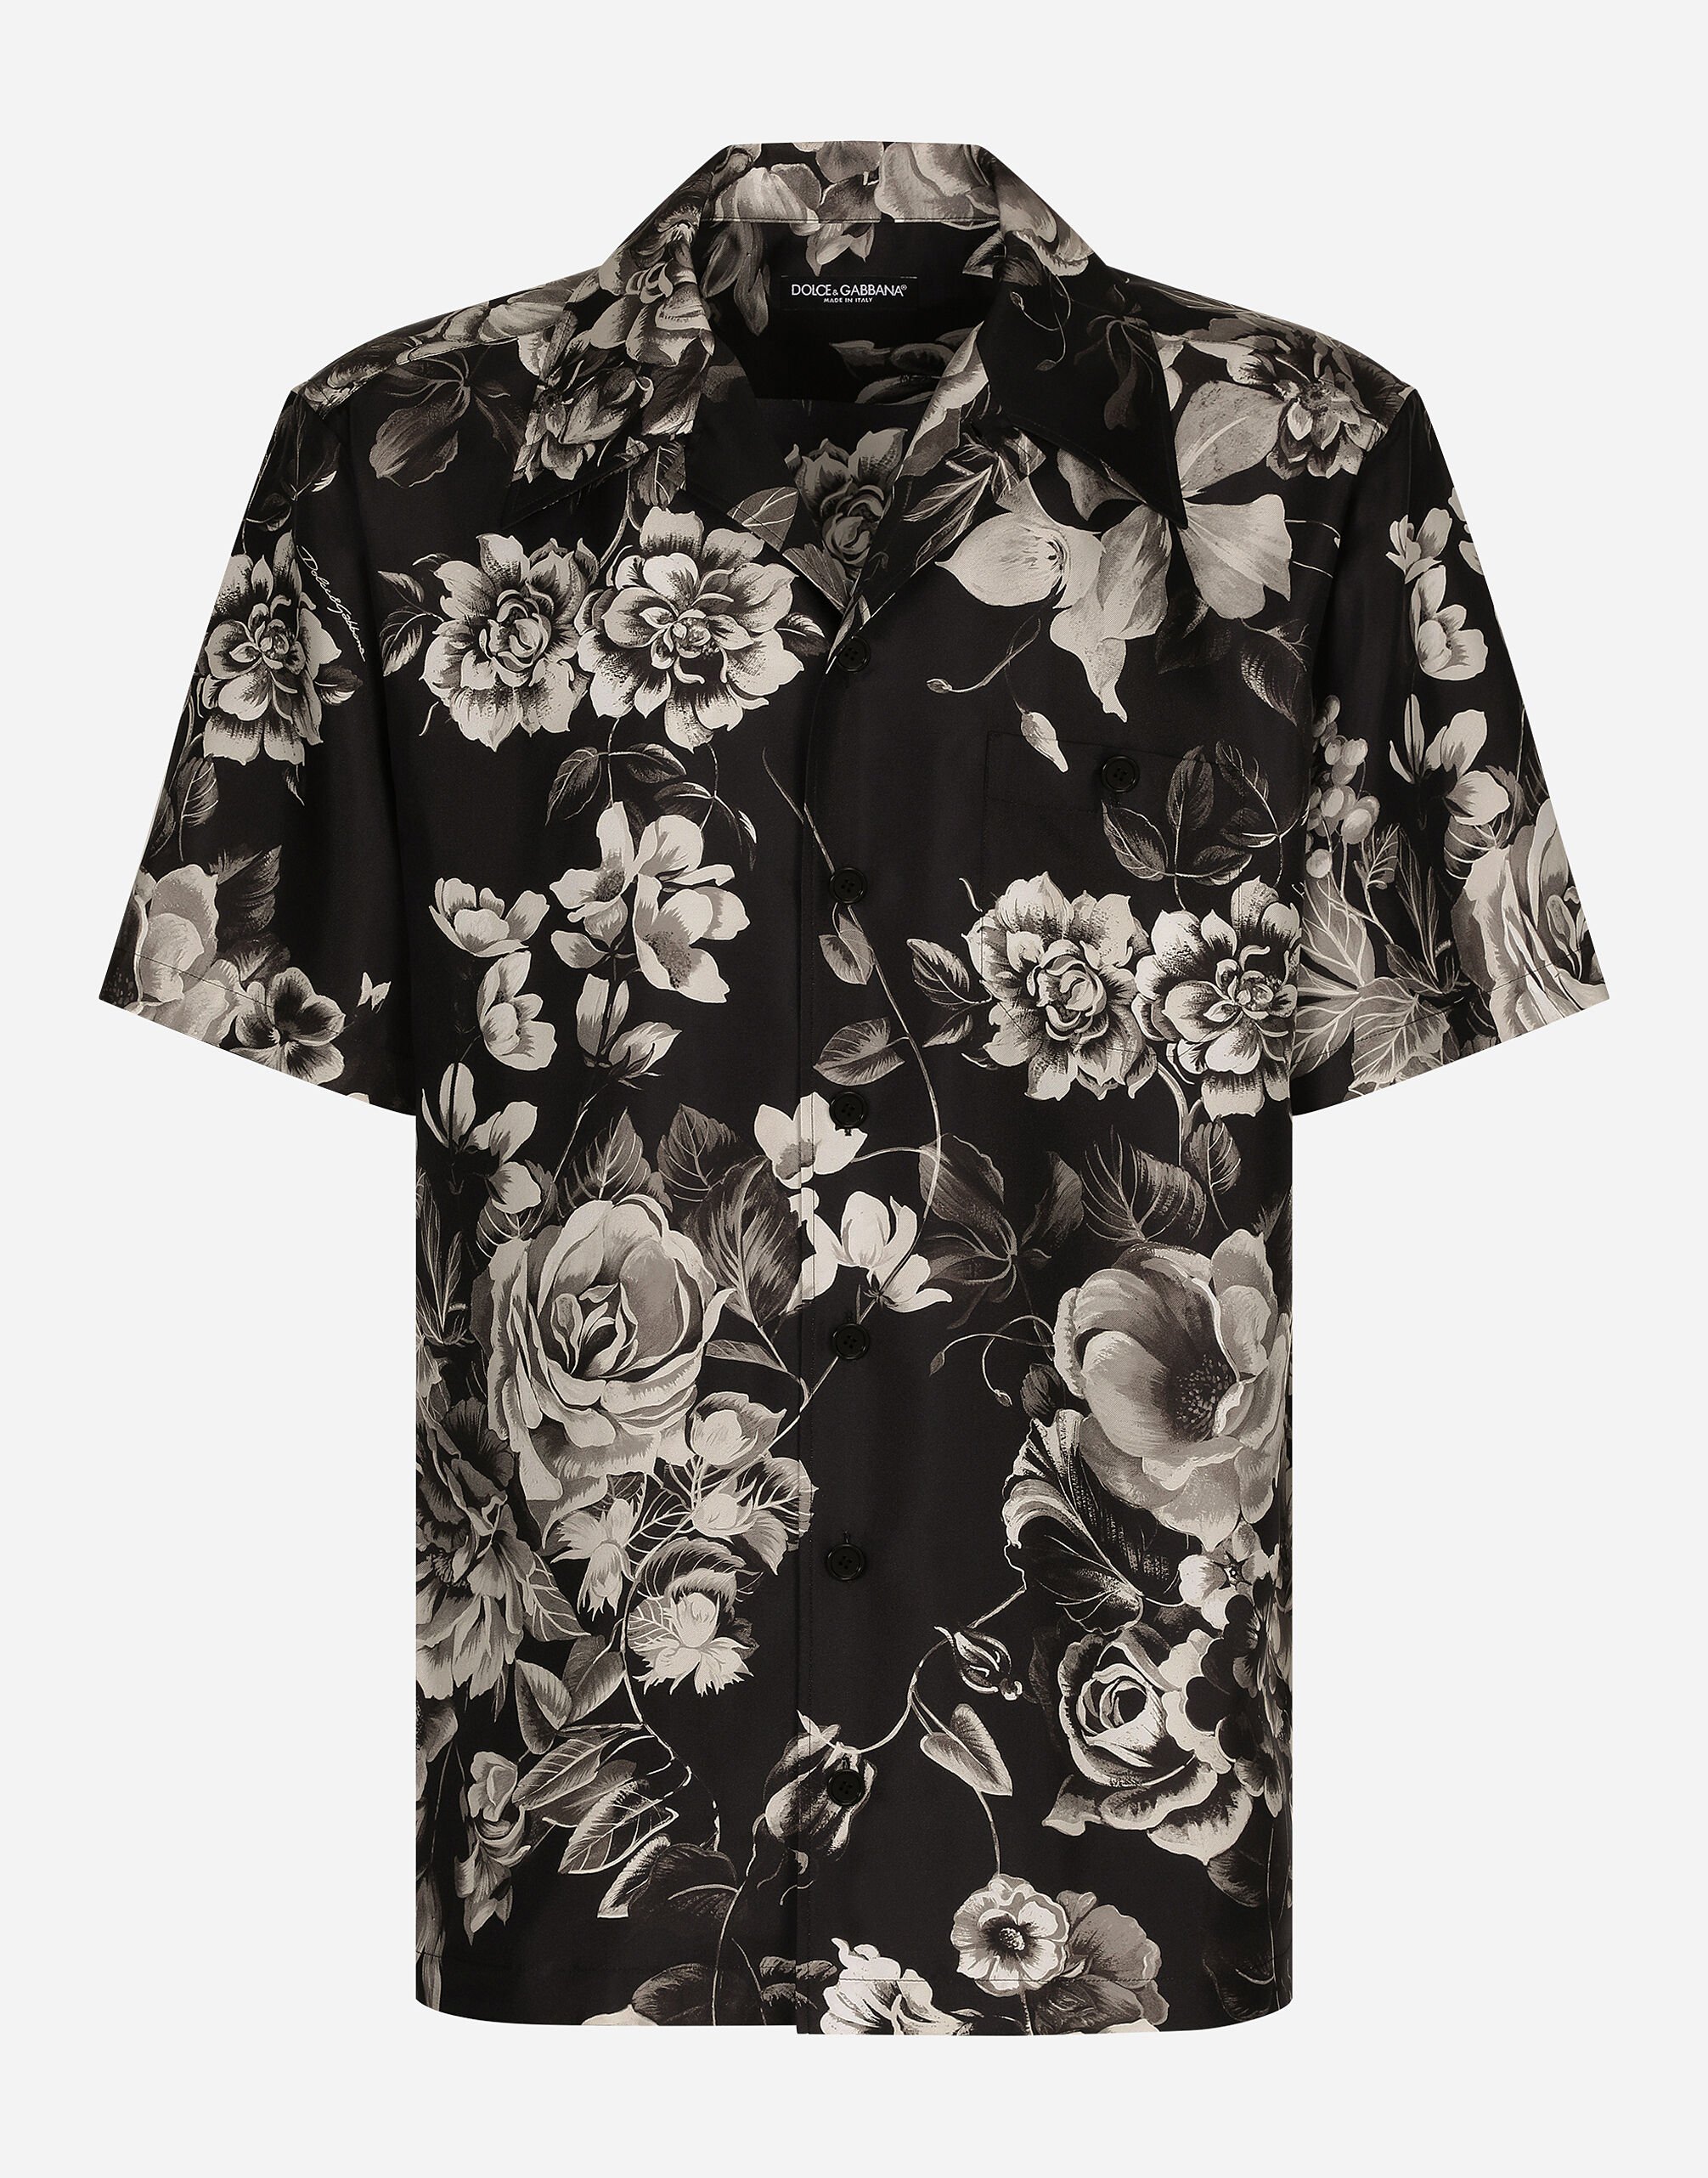 Dolce & Gabbana Hawaiihemd Seide Blumenprint Drucken G9AZDTFS6N5